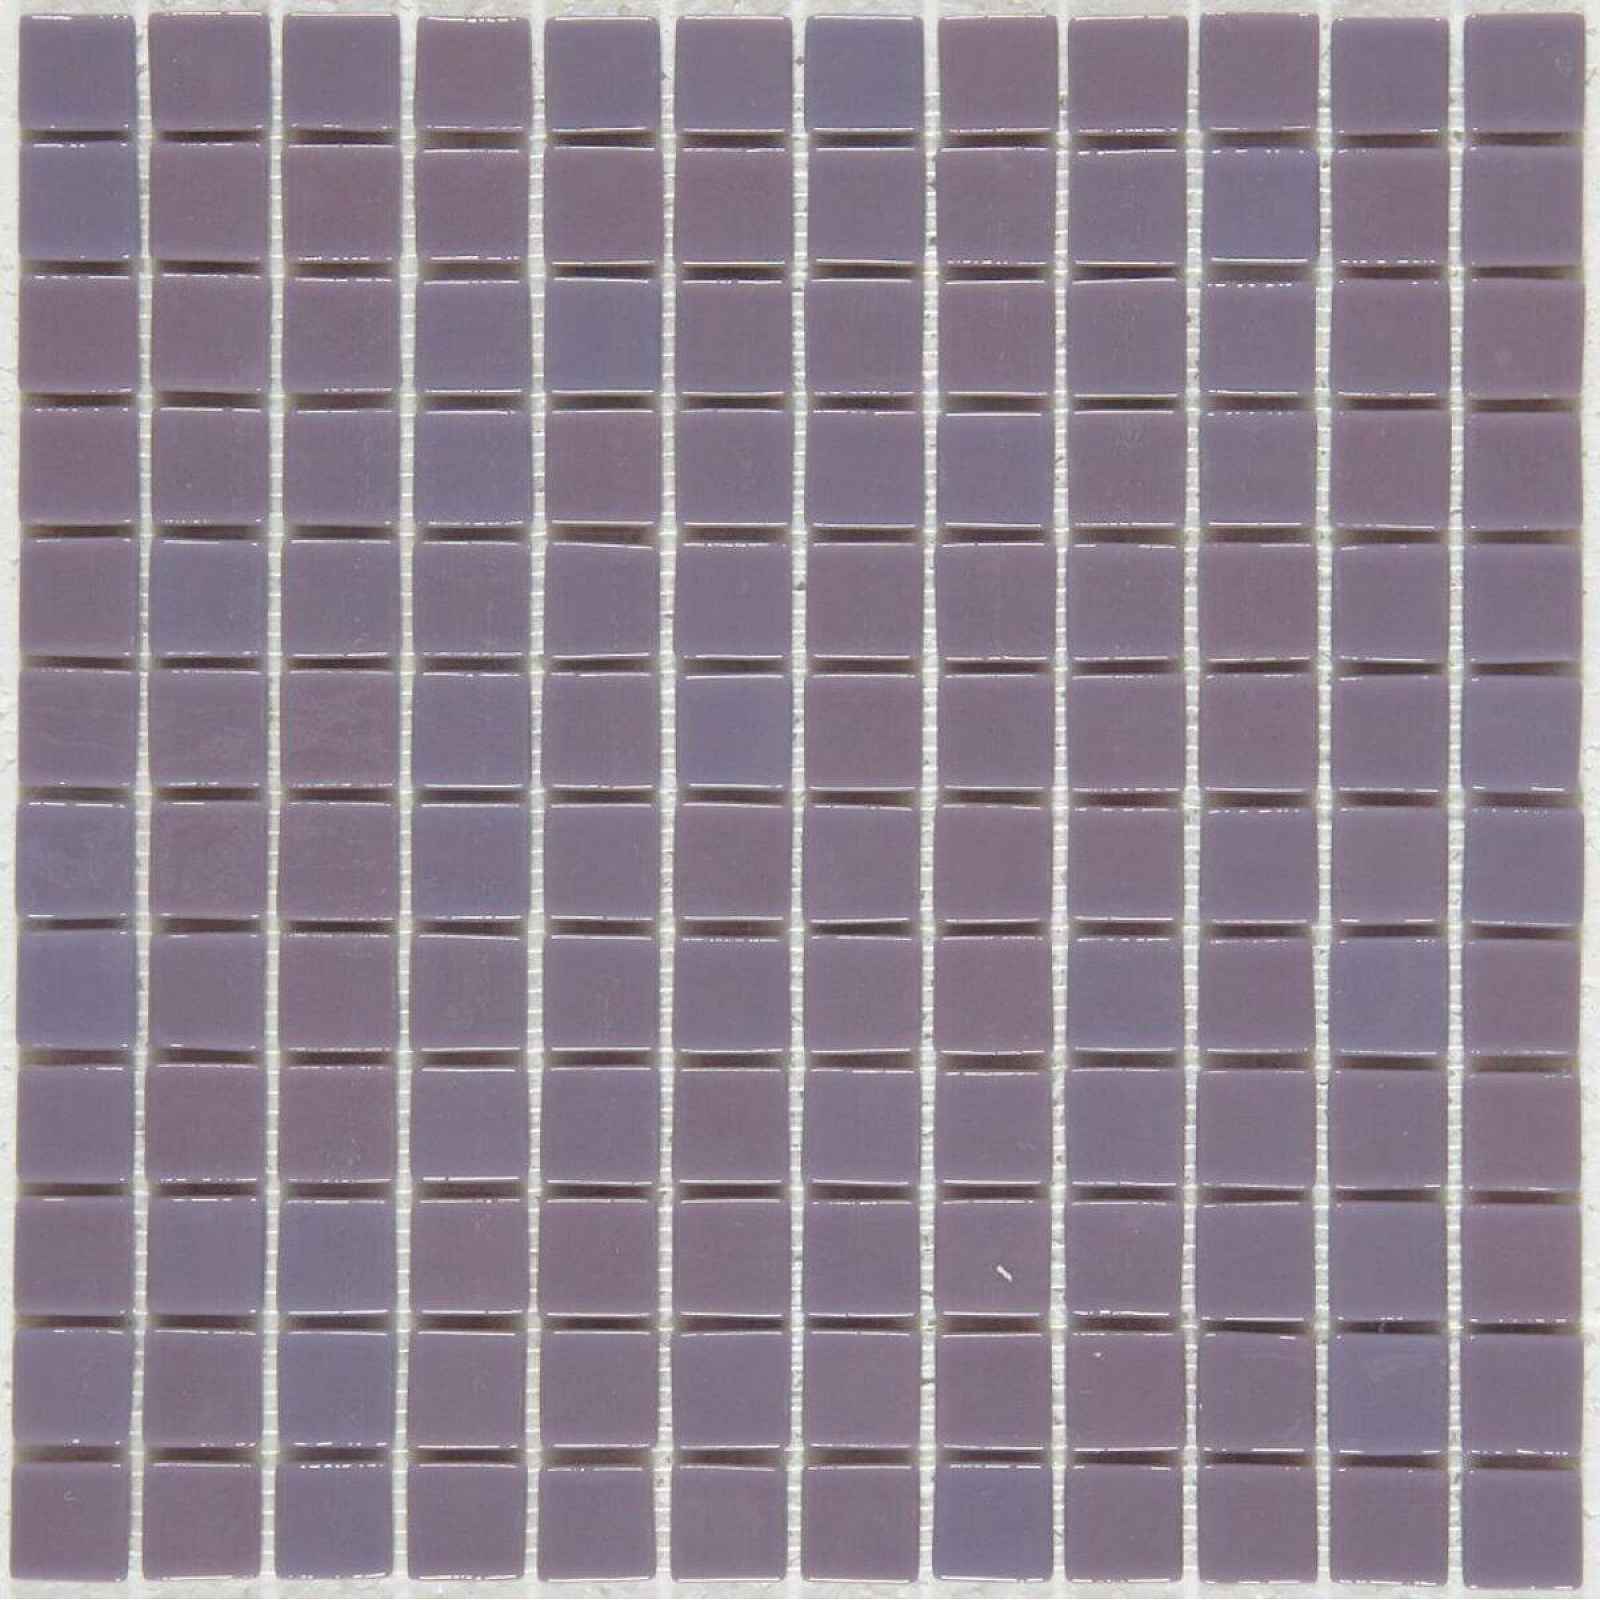 Skleněná mozaika Monocolores violeta 30x30 cm lesk MC602